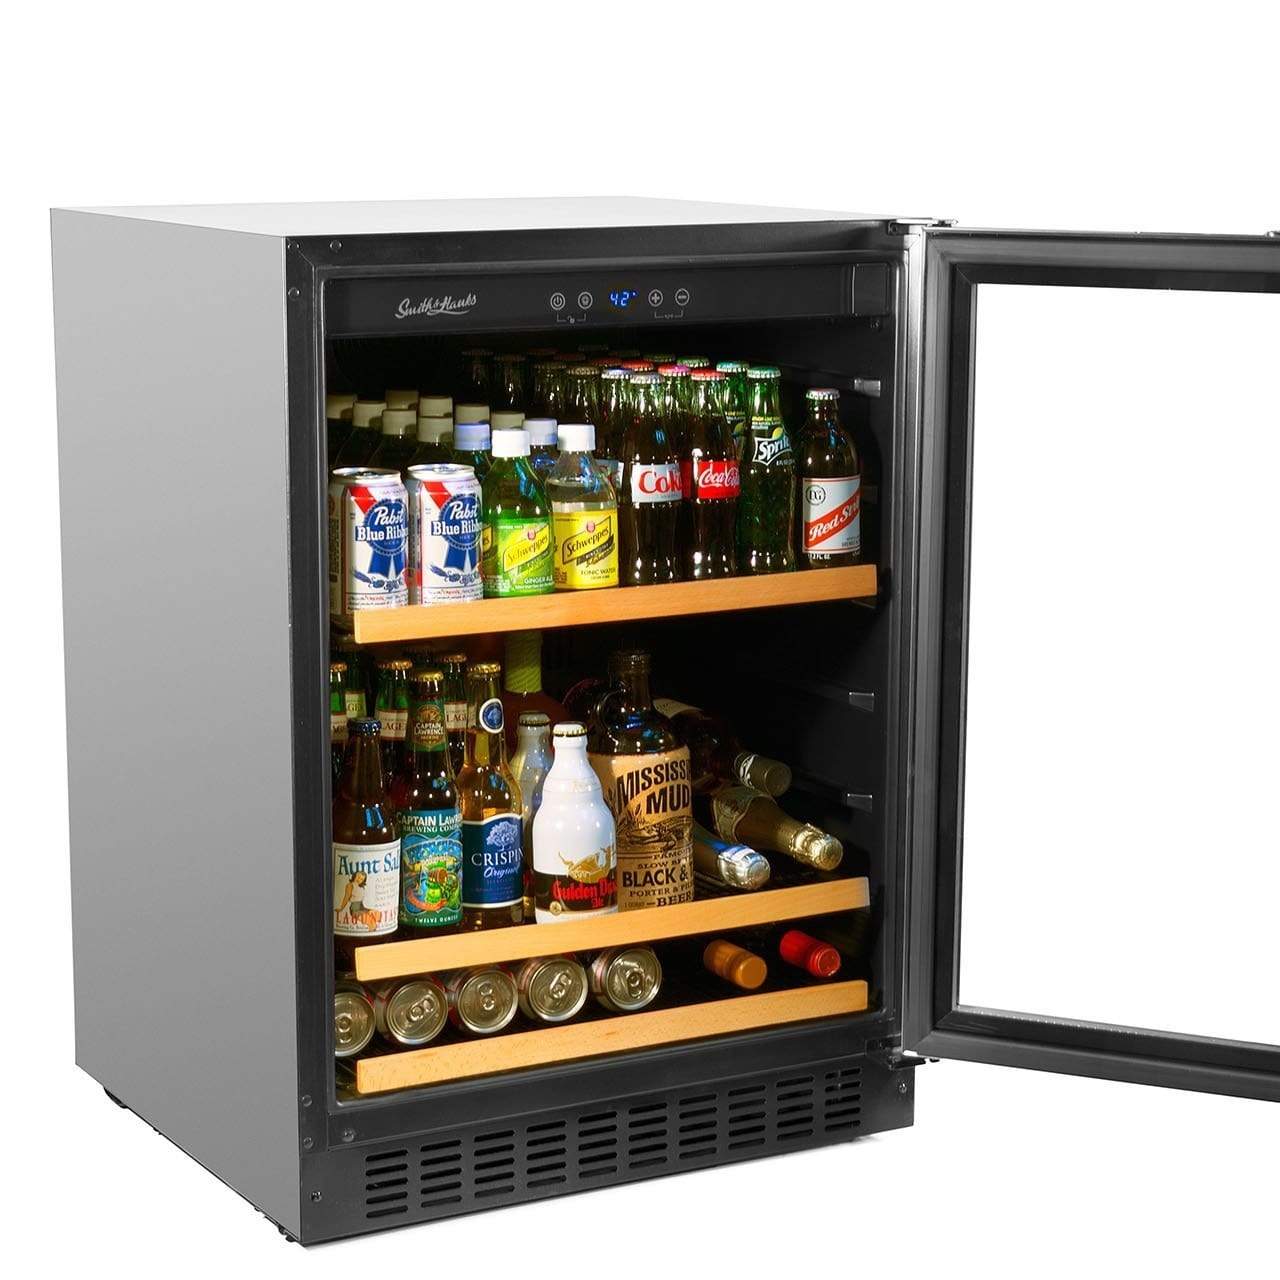 Smith & Hanks 178 Can Beverage Fridge RE100012 Beverage Centers BEV145SRE Luxury Appliances Direct